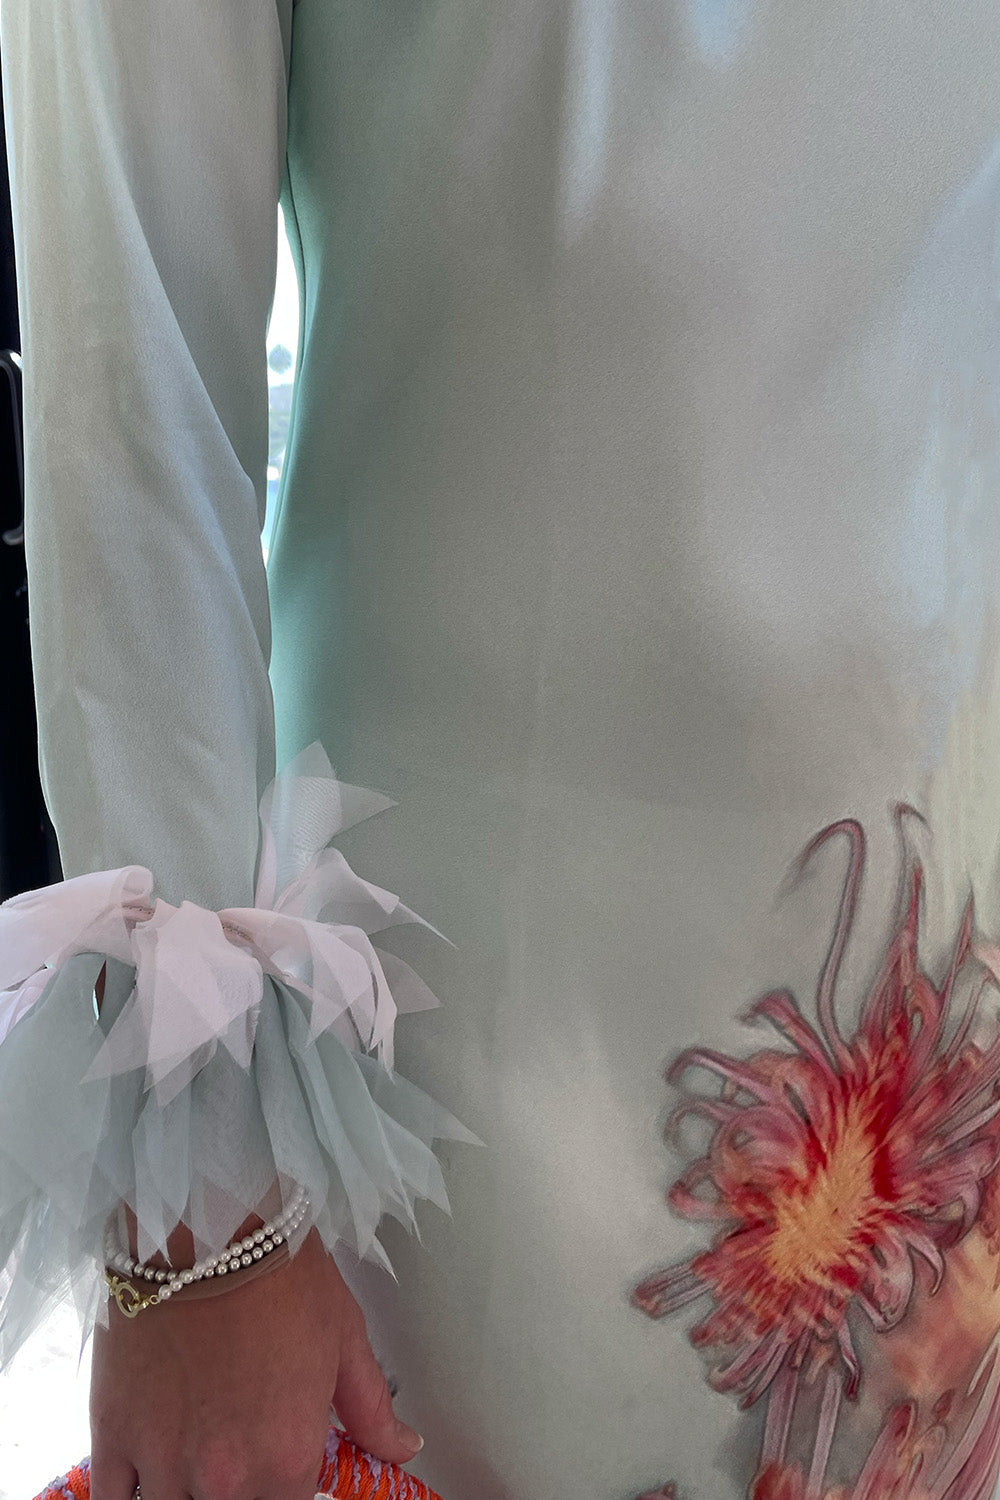 Collina Strada - Satin Fresia Dress: Mint Chrysanthemum